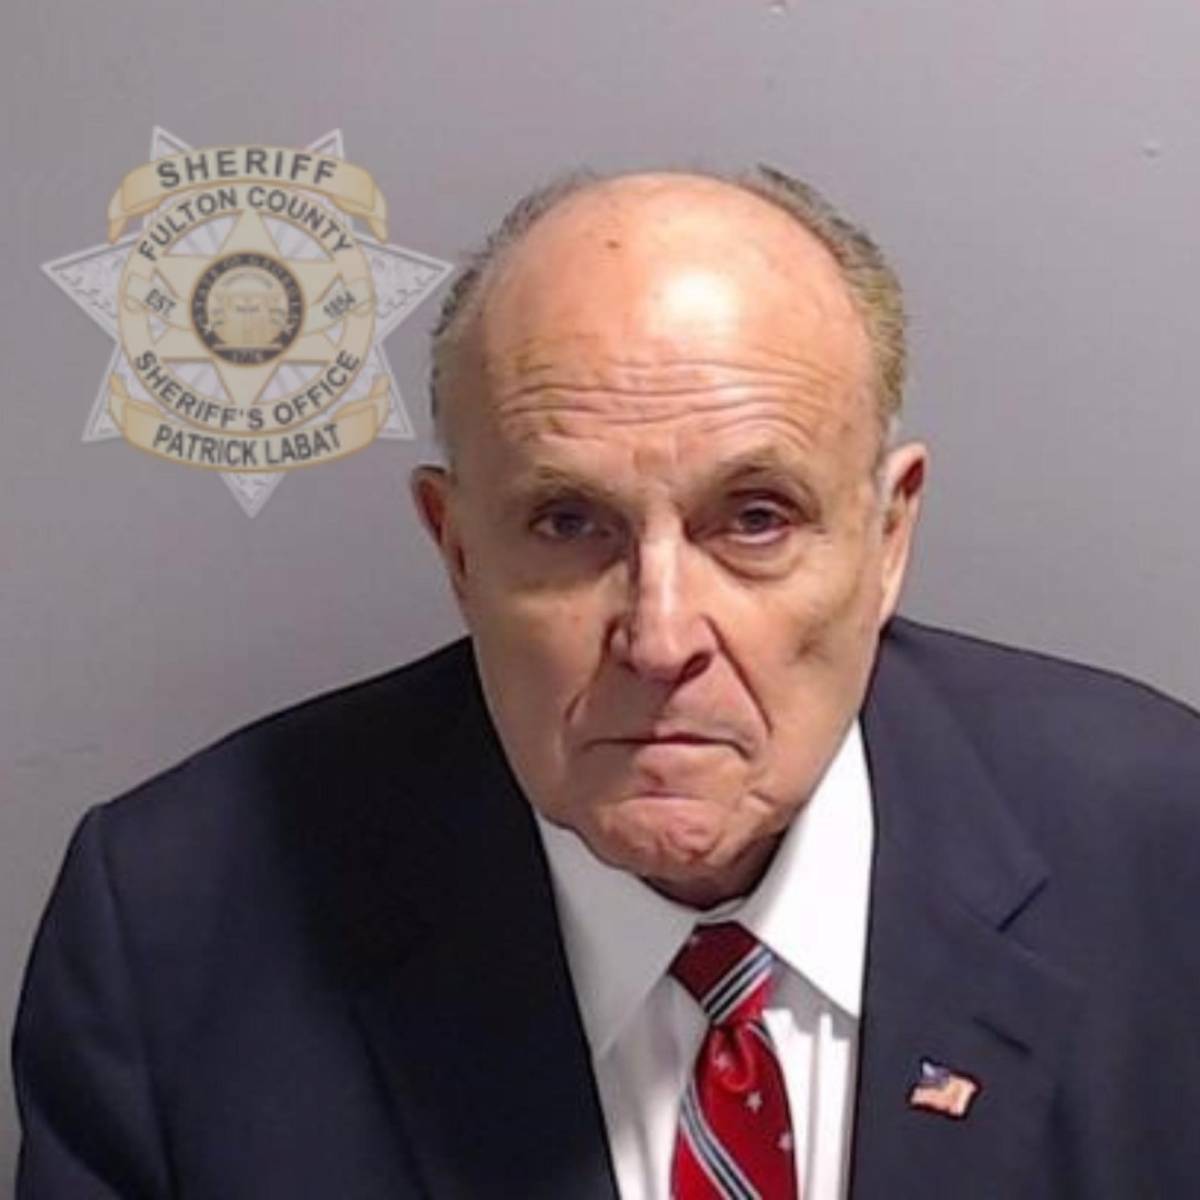 Rudy Giuliani si costituisce: il "sindaco d'America" arrestato in Georgia